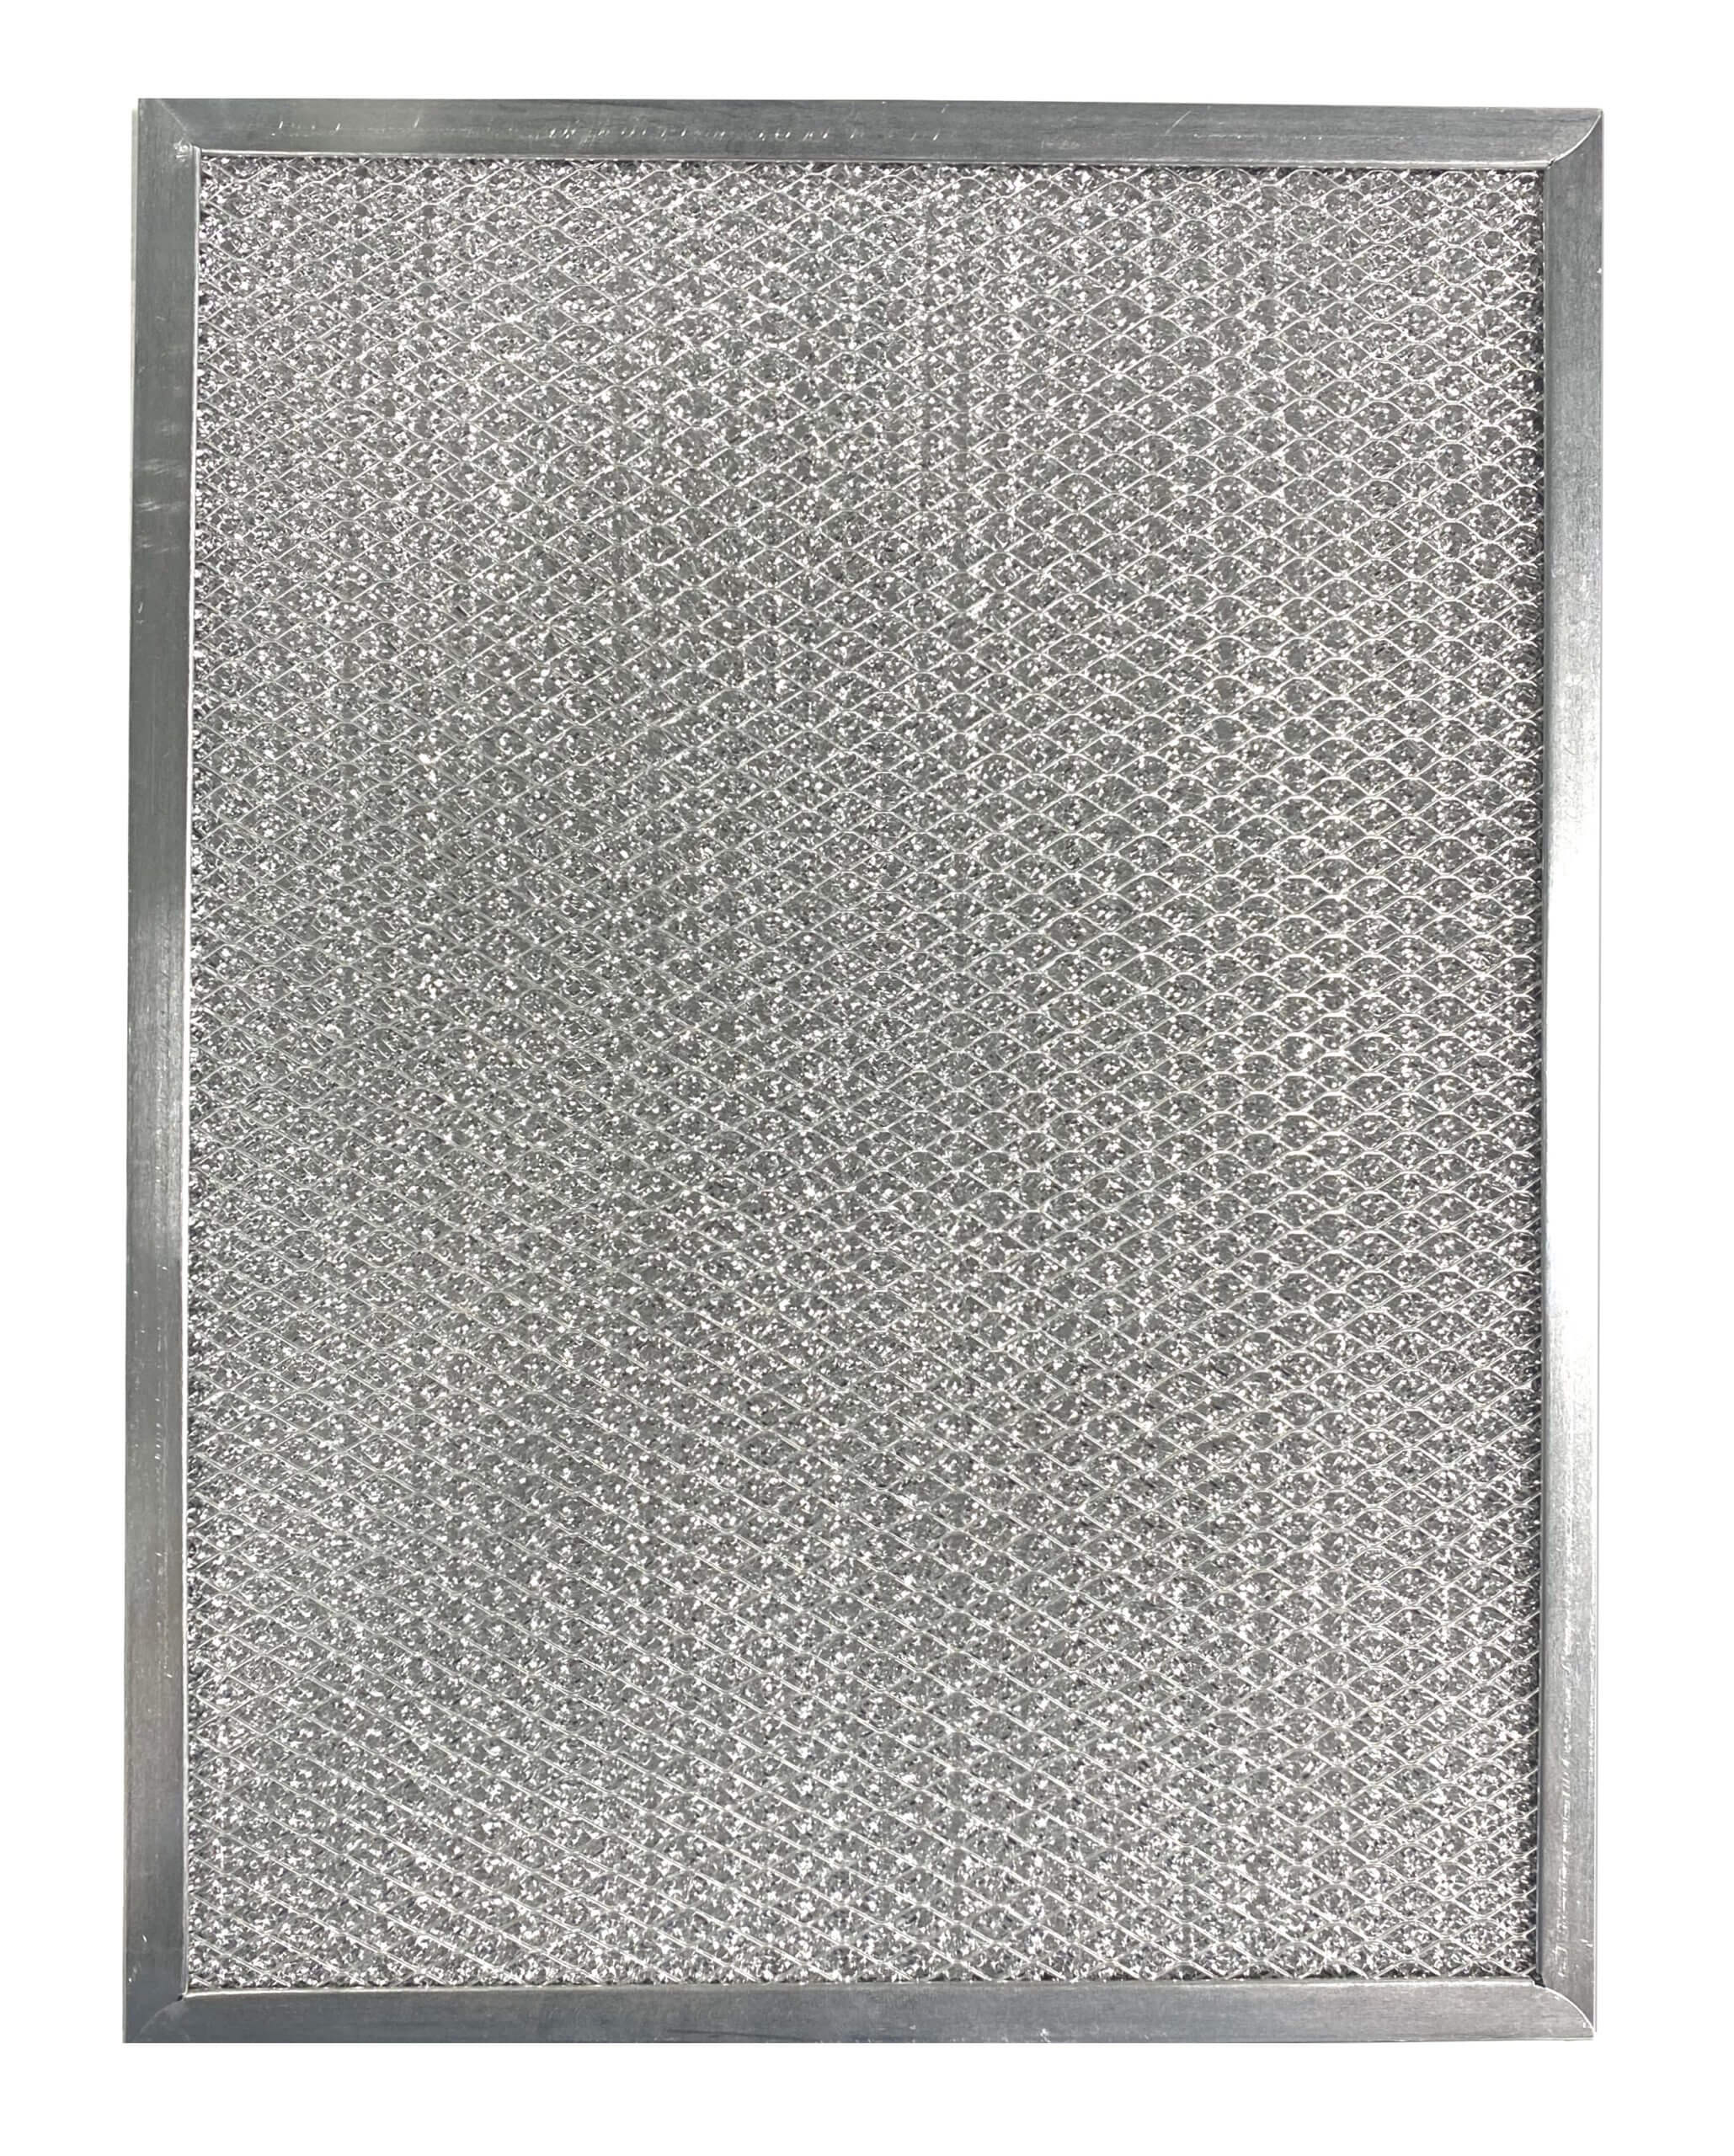 Aluminum A60703 Grease Range Hood Filter 10 x 11 3/4 x 3/8